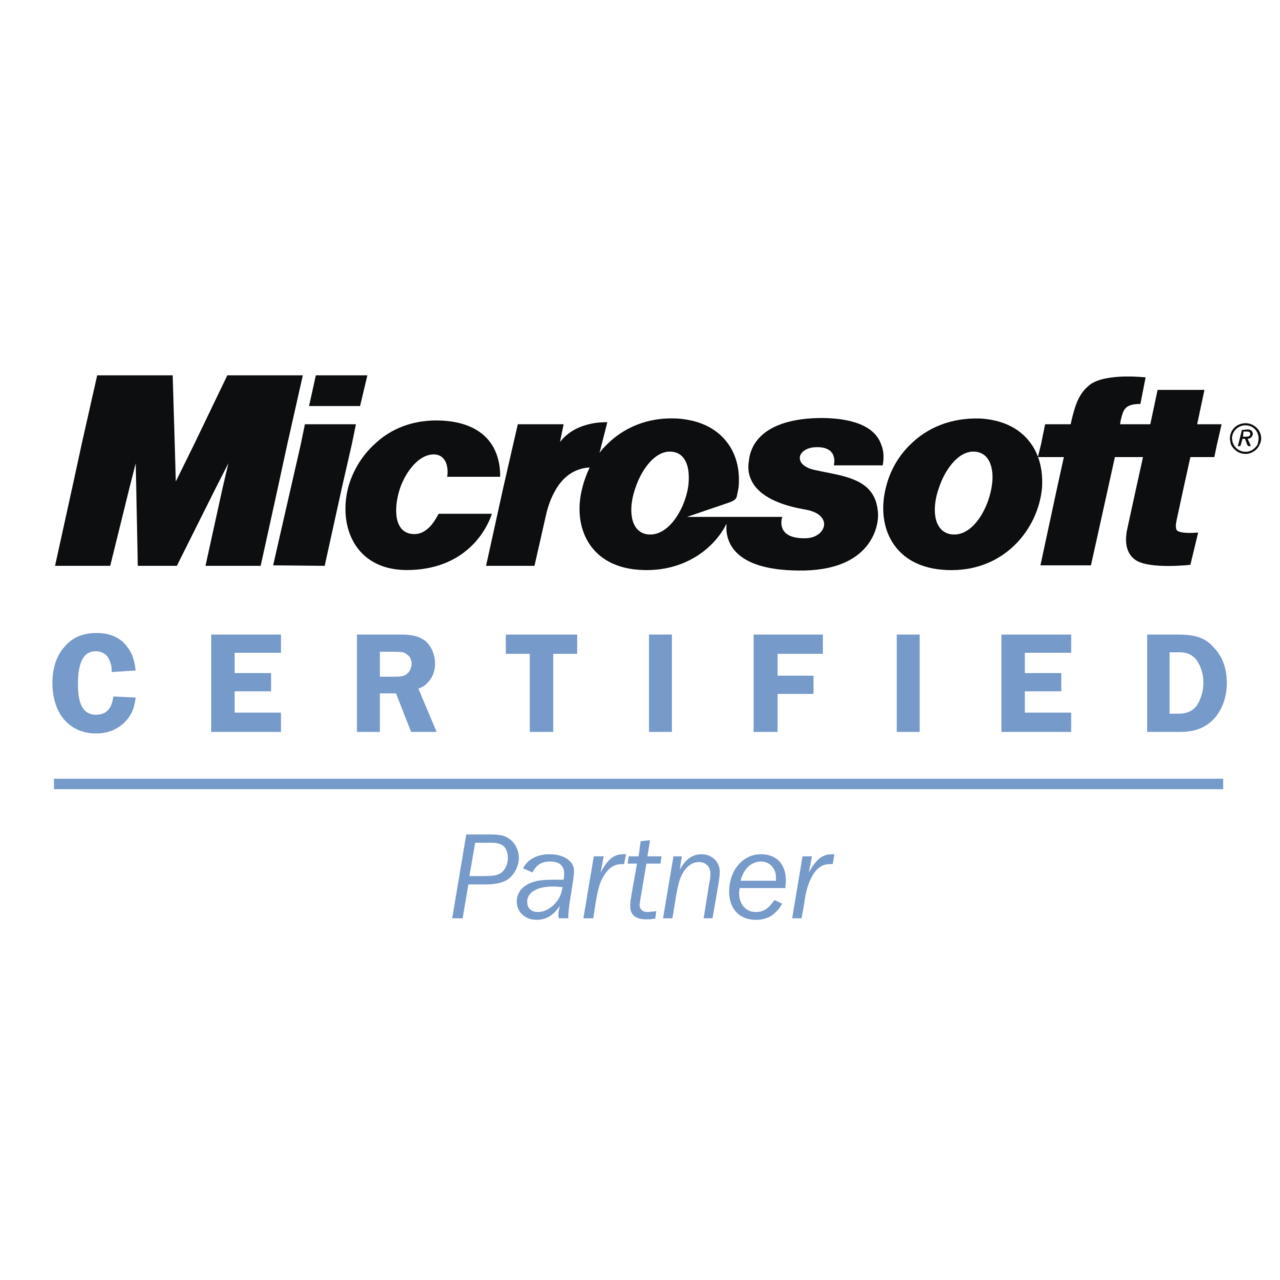 microsoft-certified-partner-logo